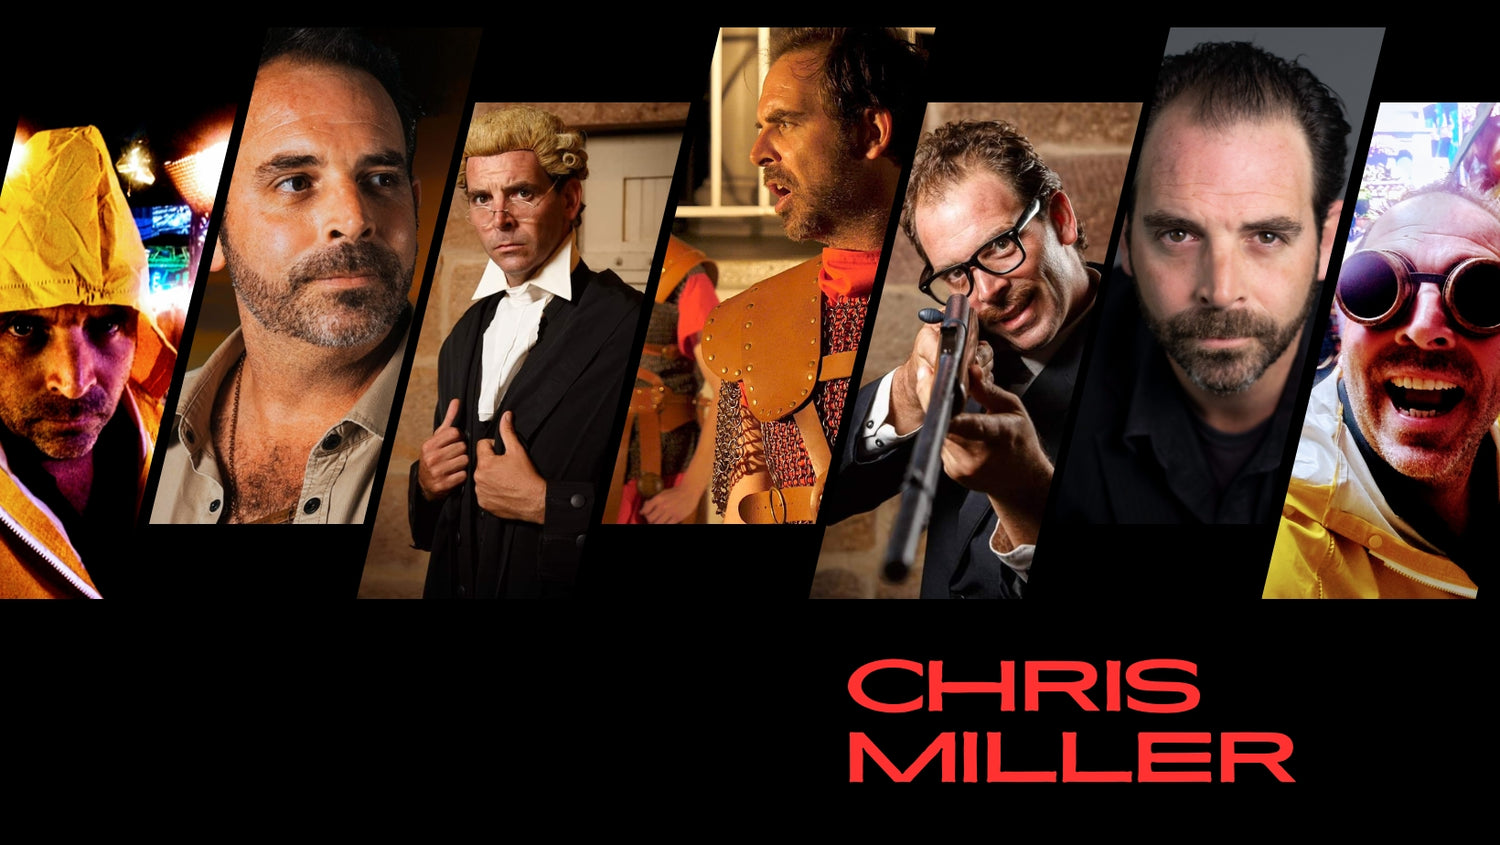 Chris Miller Australian Actor and Voice Over Artist